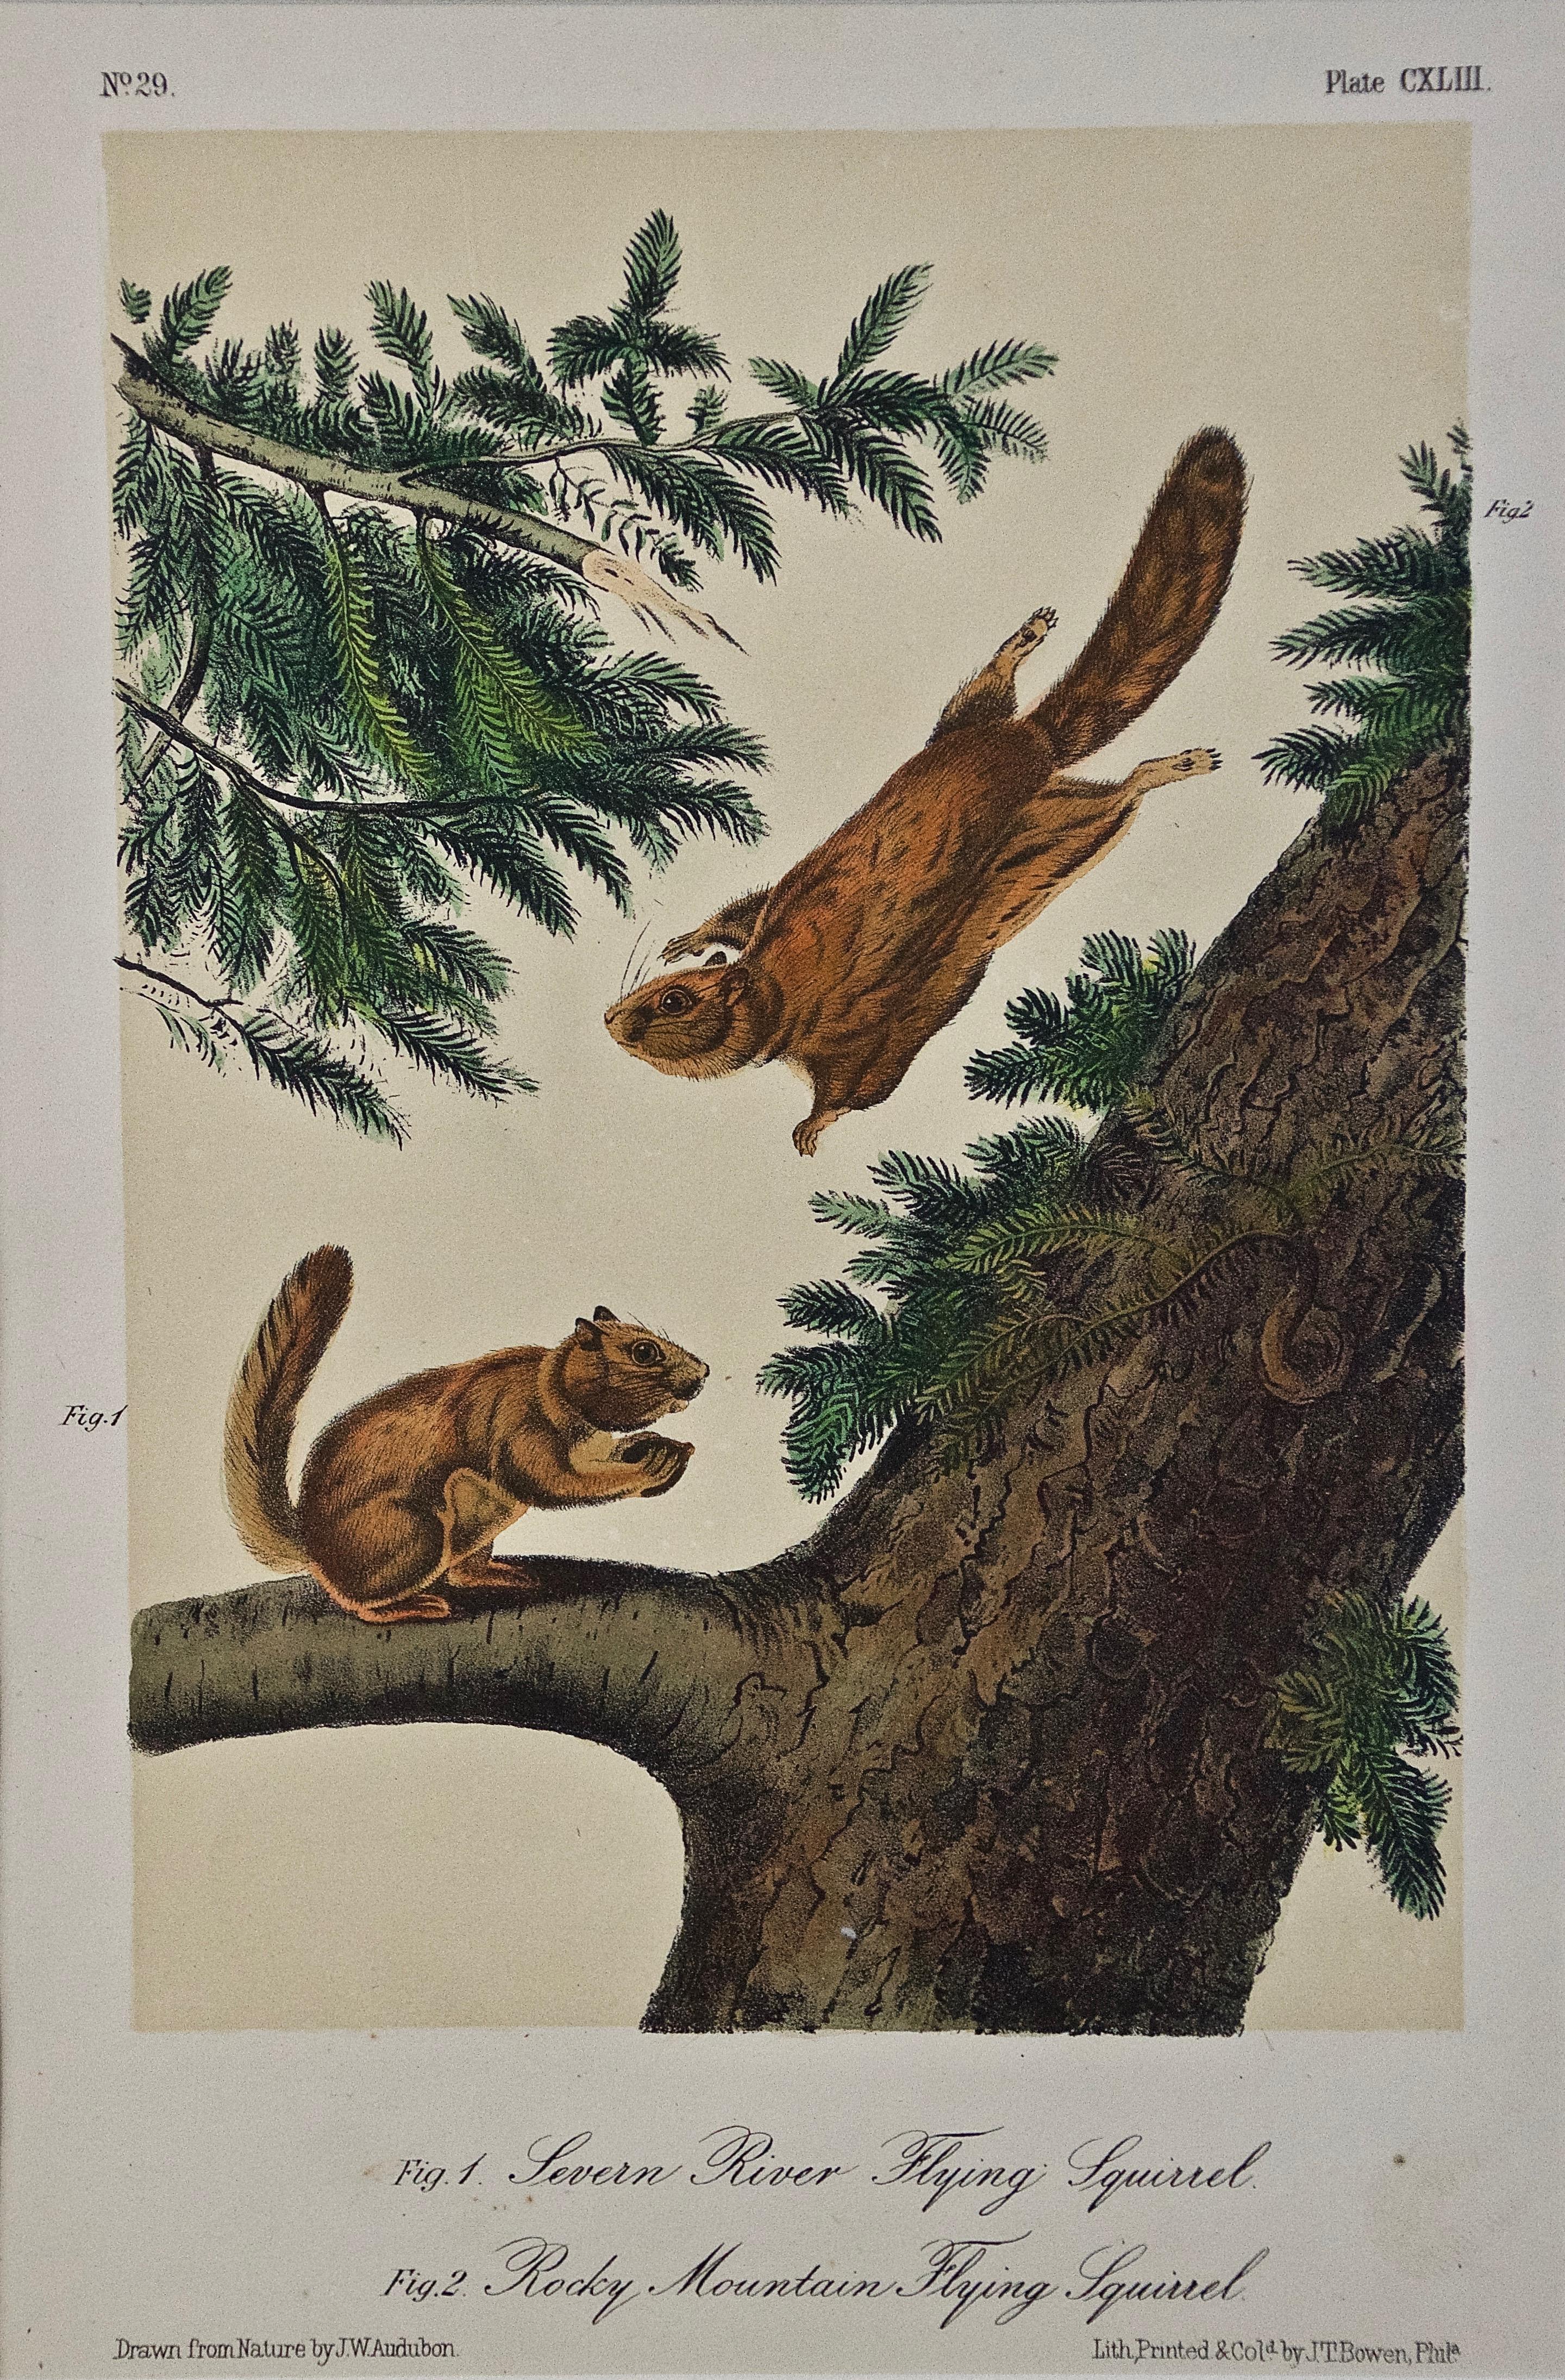 Flying Squirrels: An Original Audubon Hand-colored Lithograph  - Print by John James Audubon